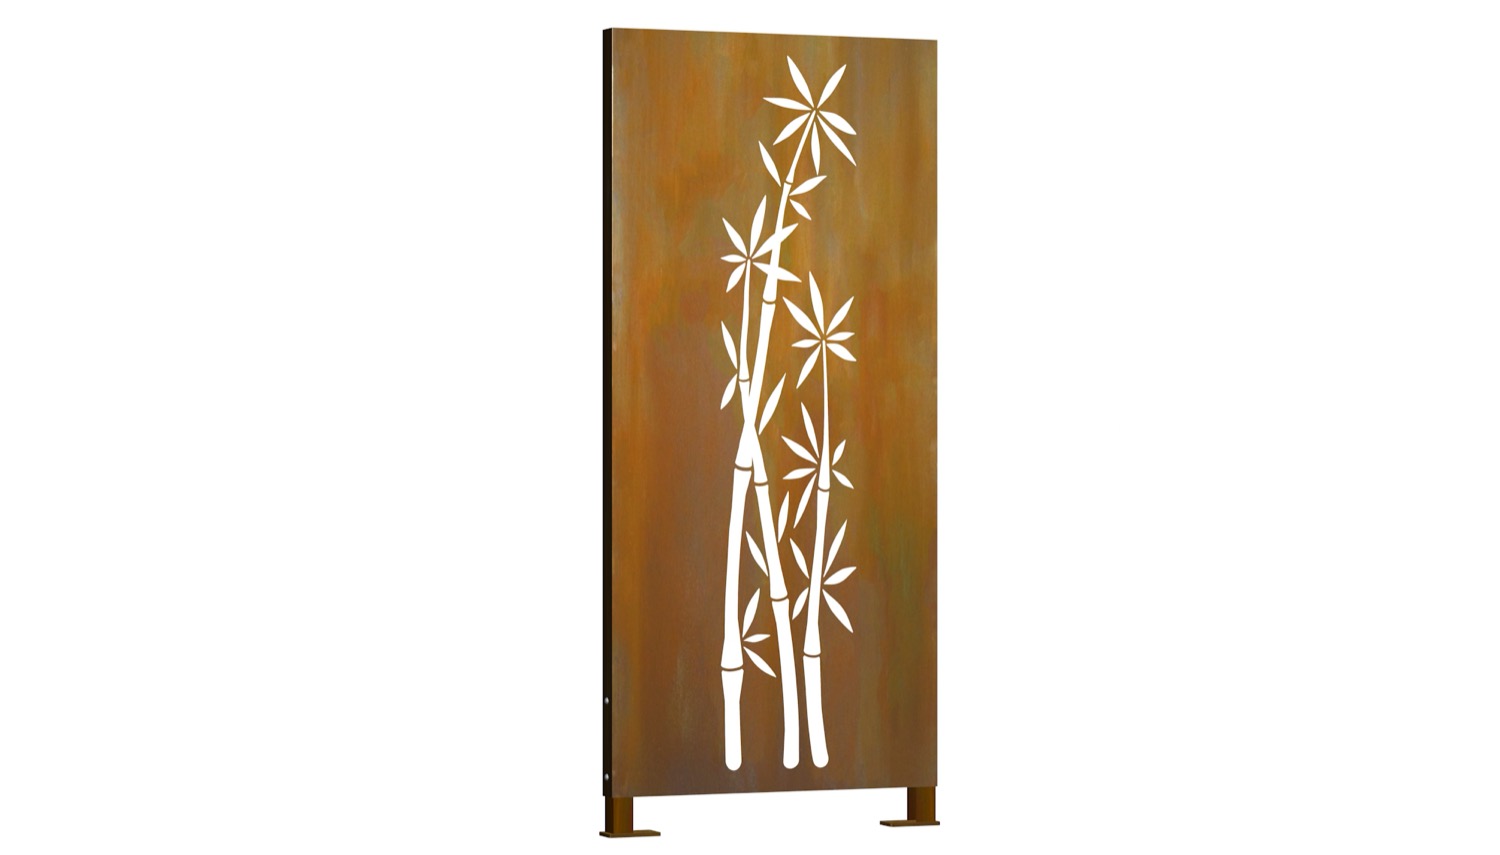 Privacyscherm cortenstaal stele bamboe struik